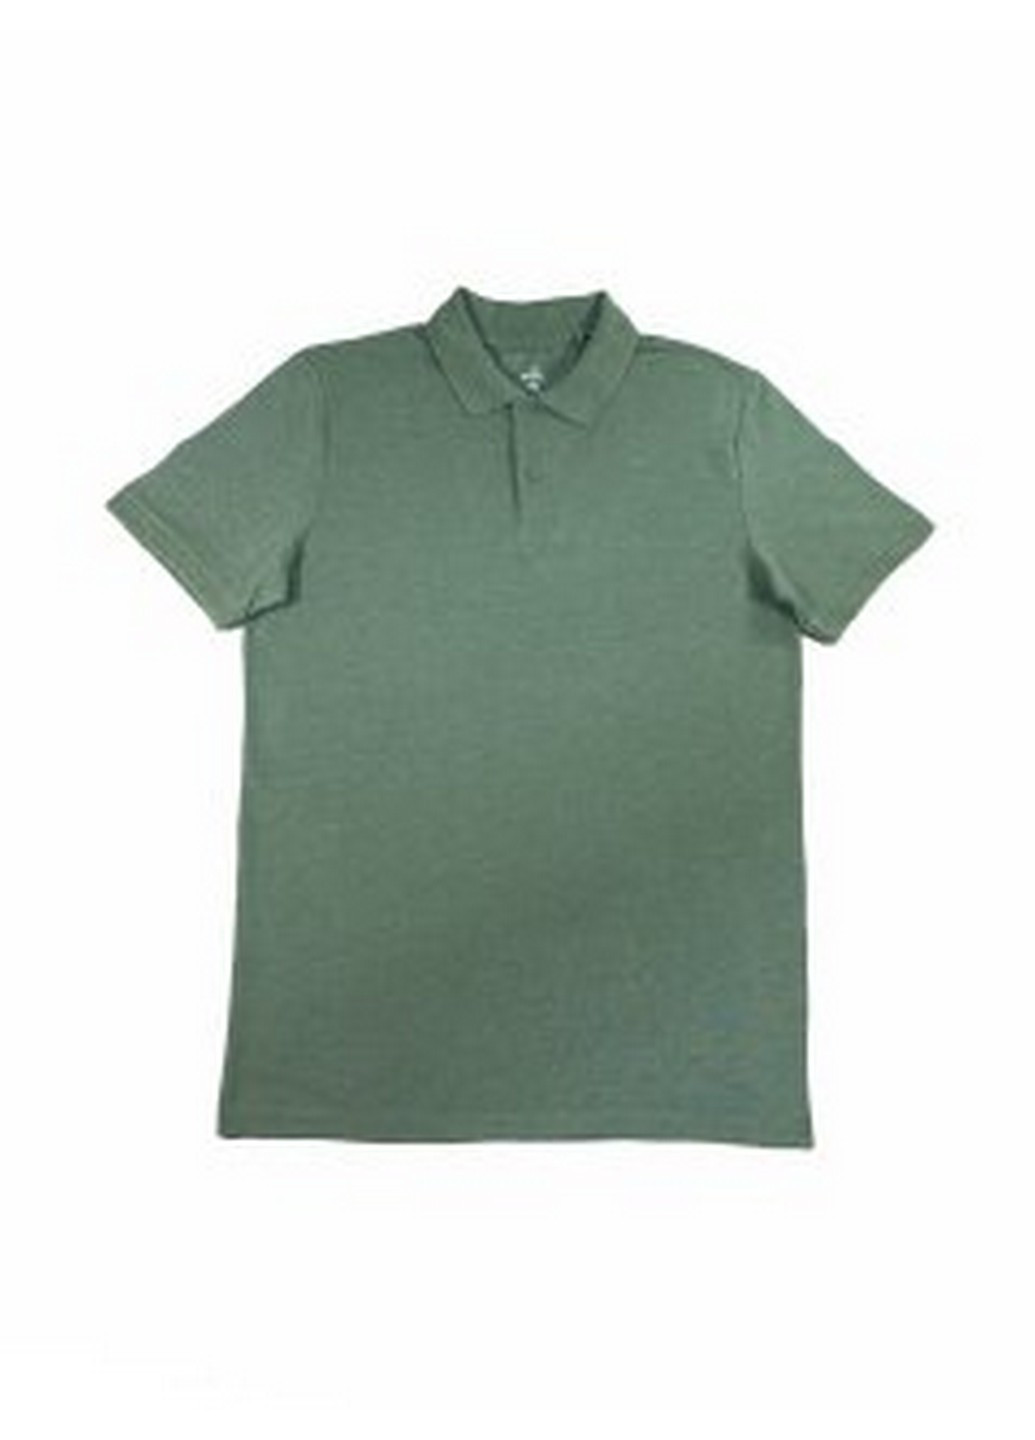 Оливковая (хаки) футболка-поло для мужчин C&A однотонная